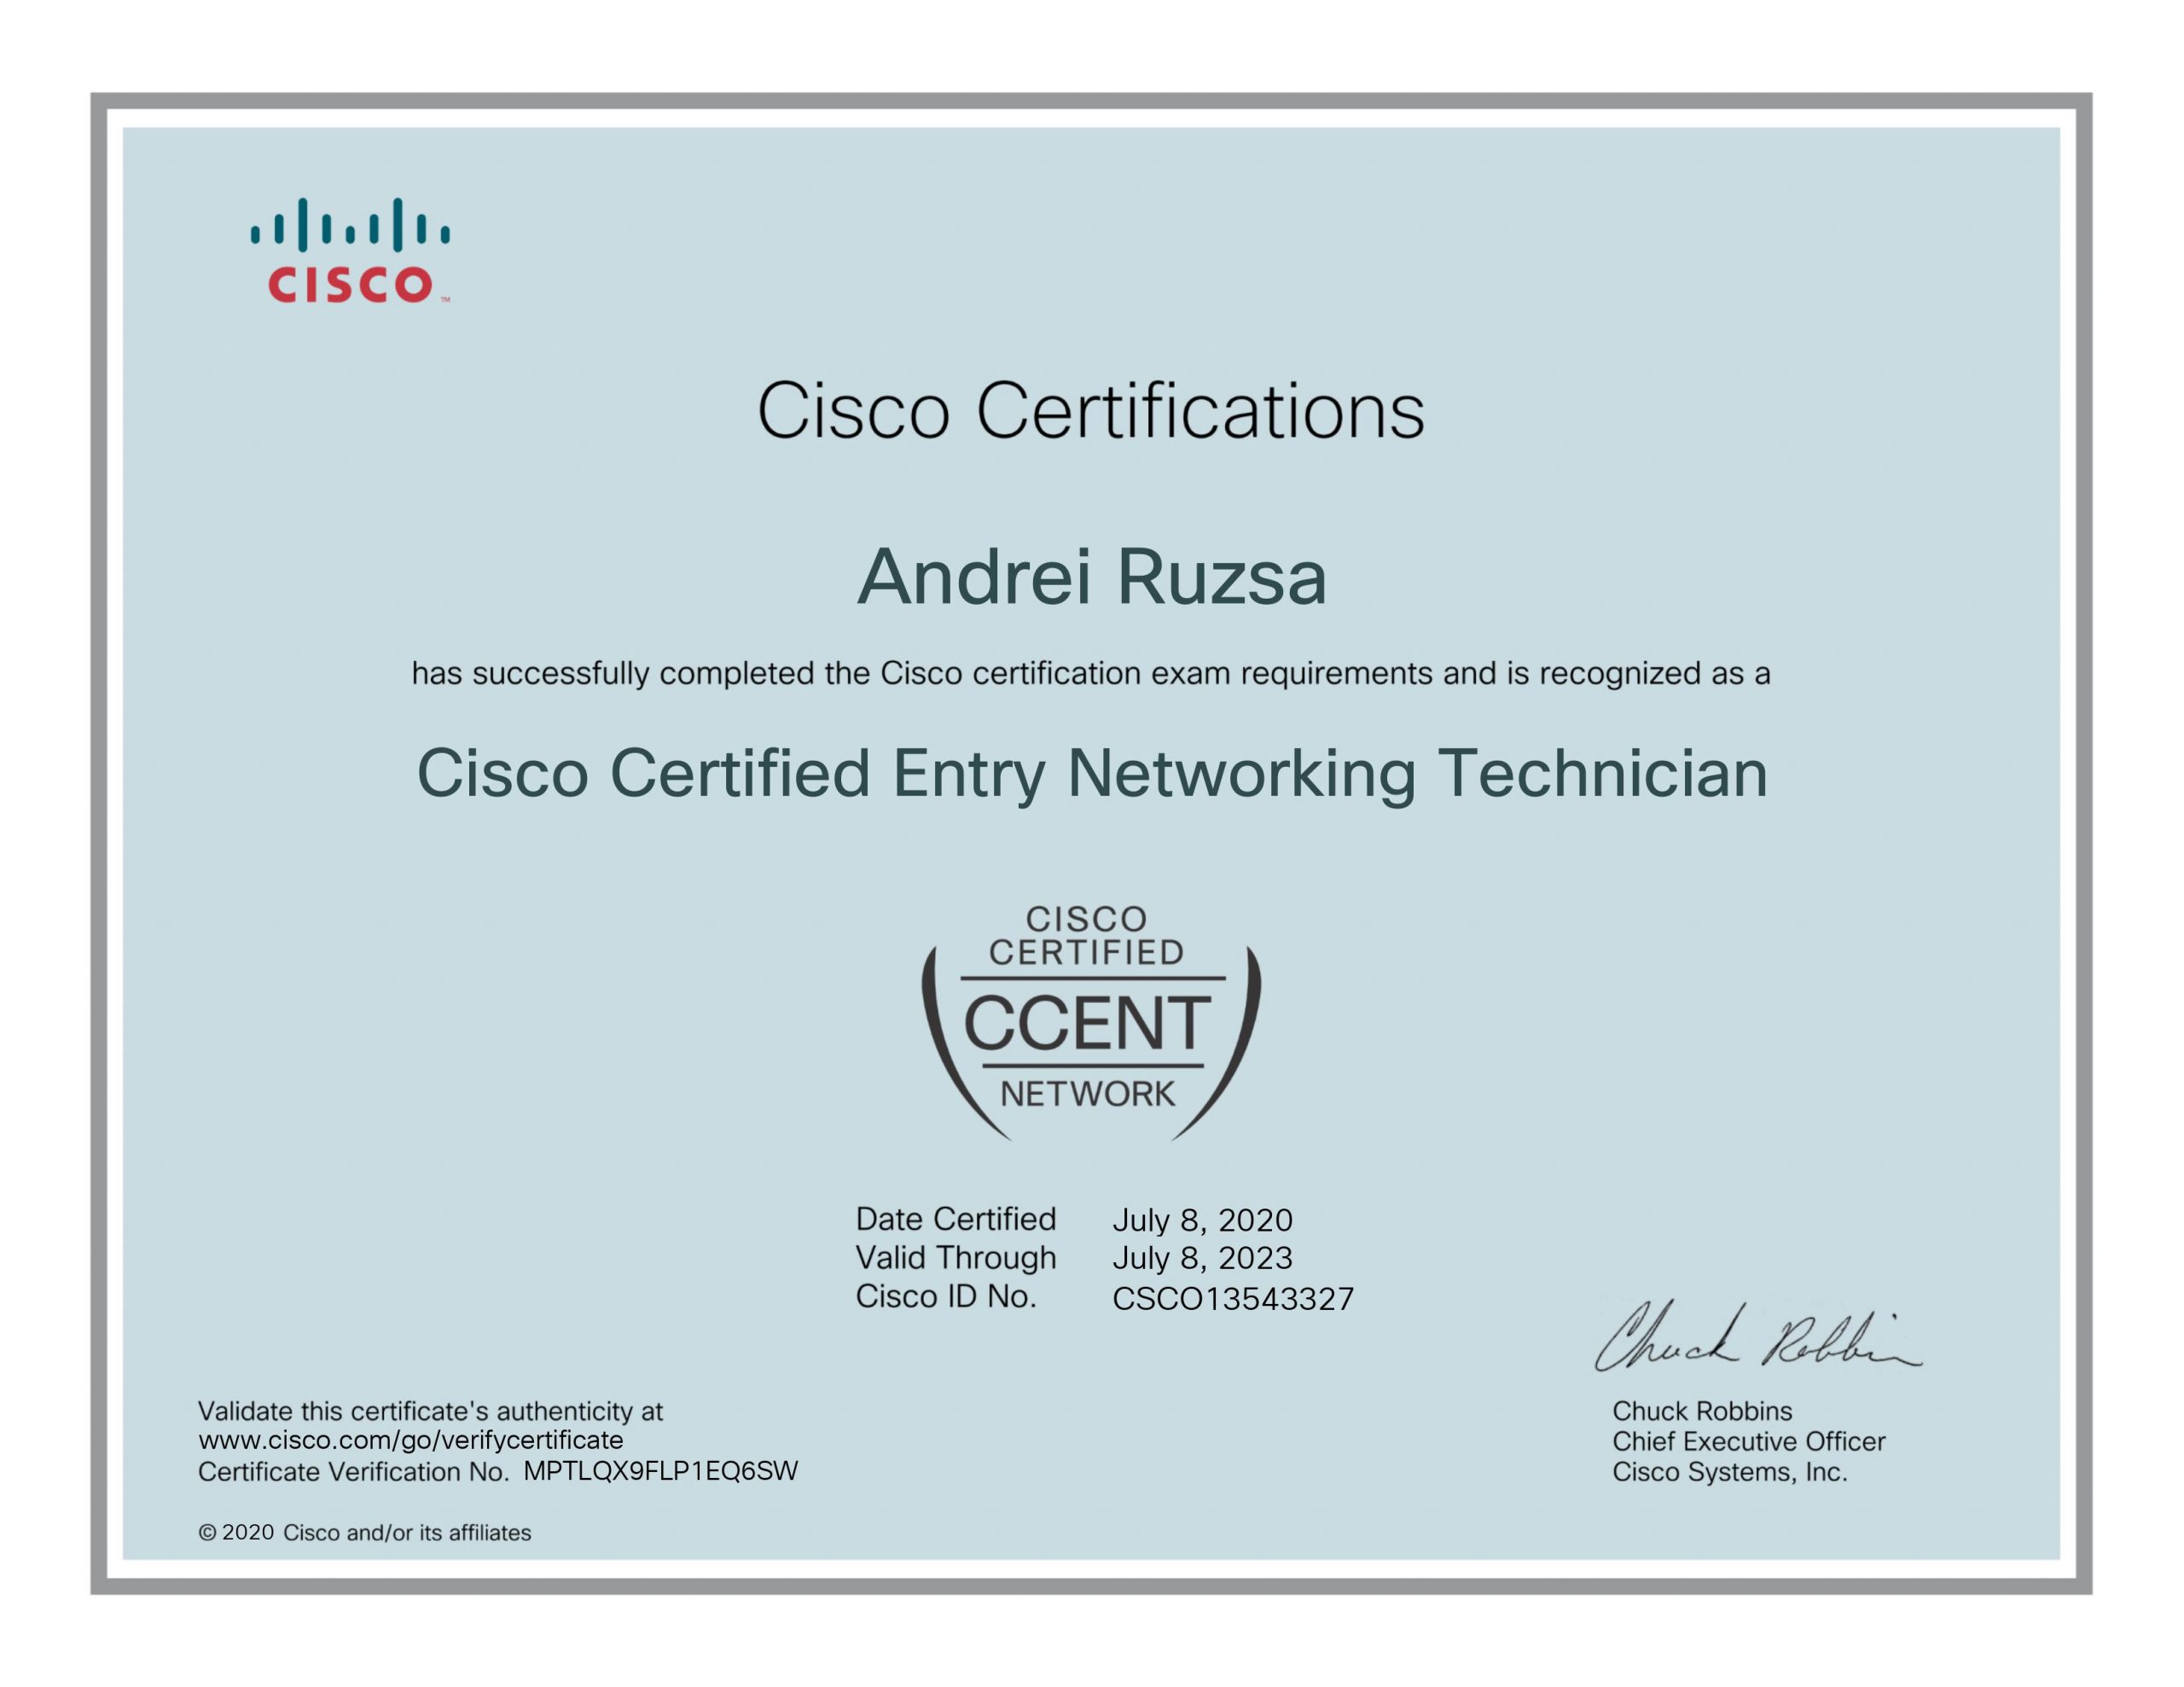 efectRO-Cisco_Certified_Entry_Networking_Technician_certificate